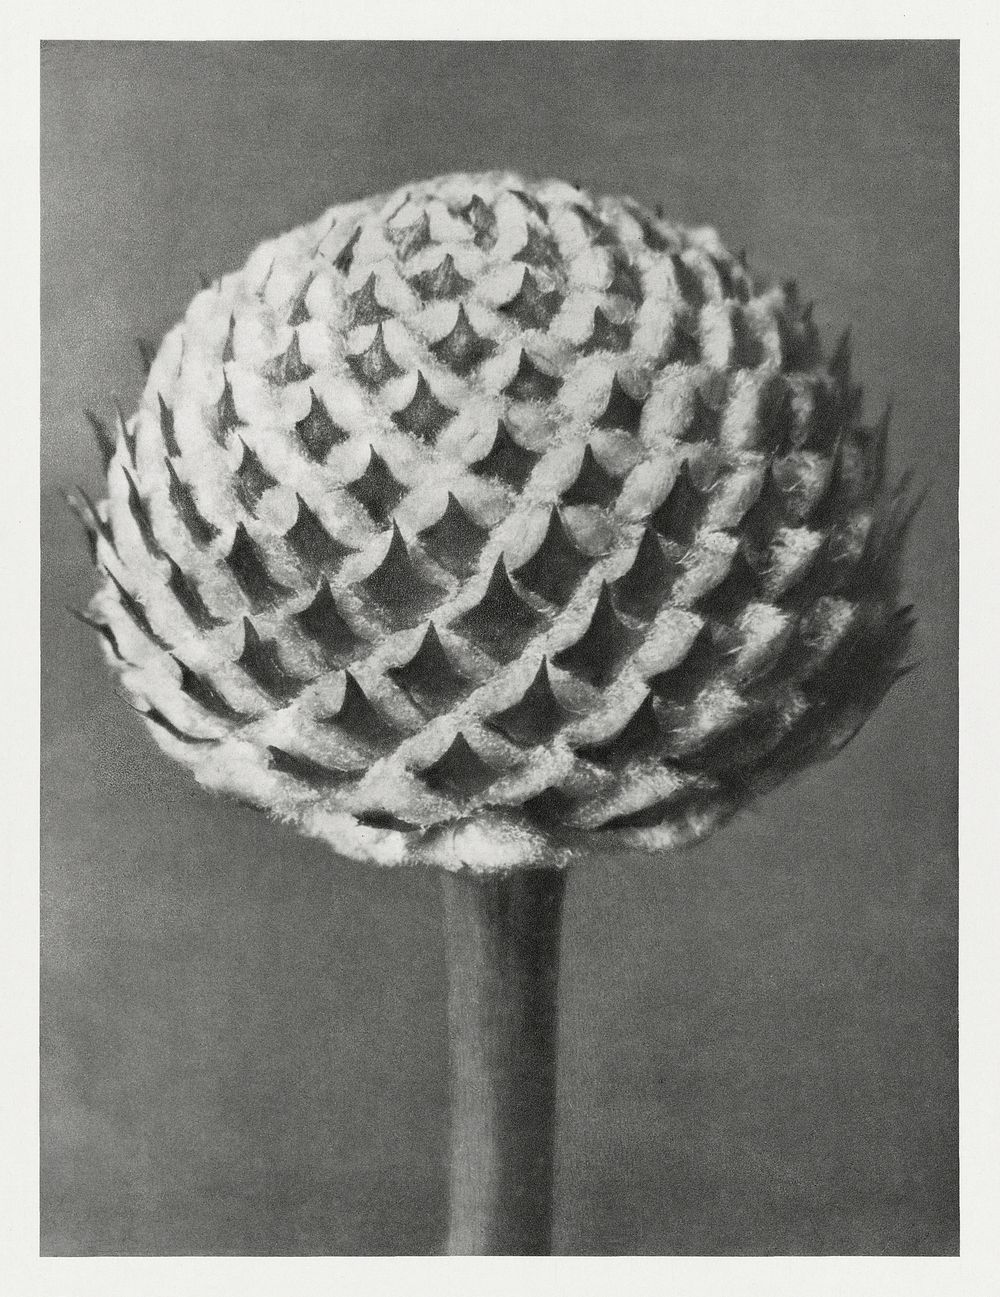 Cephalaria (Small Teasel) enlarged 10 times from Urformen der Kunst (1928) by Karl Blossfeldt. Original from The…